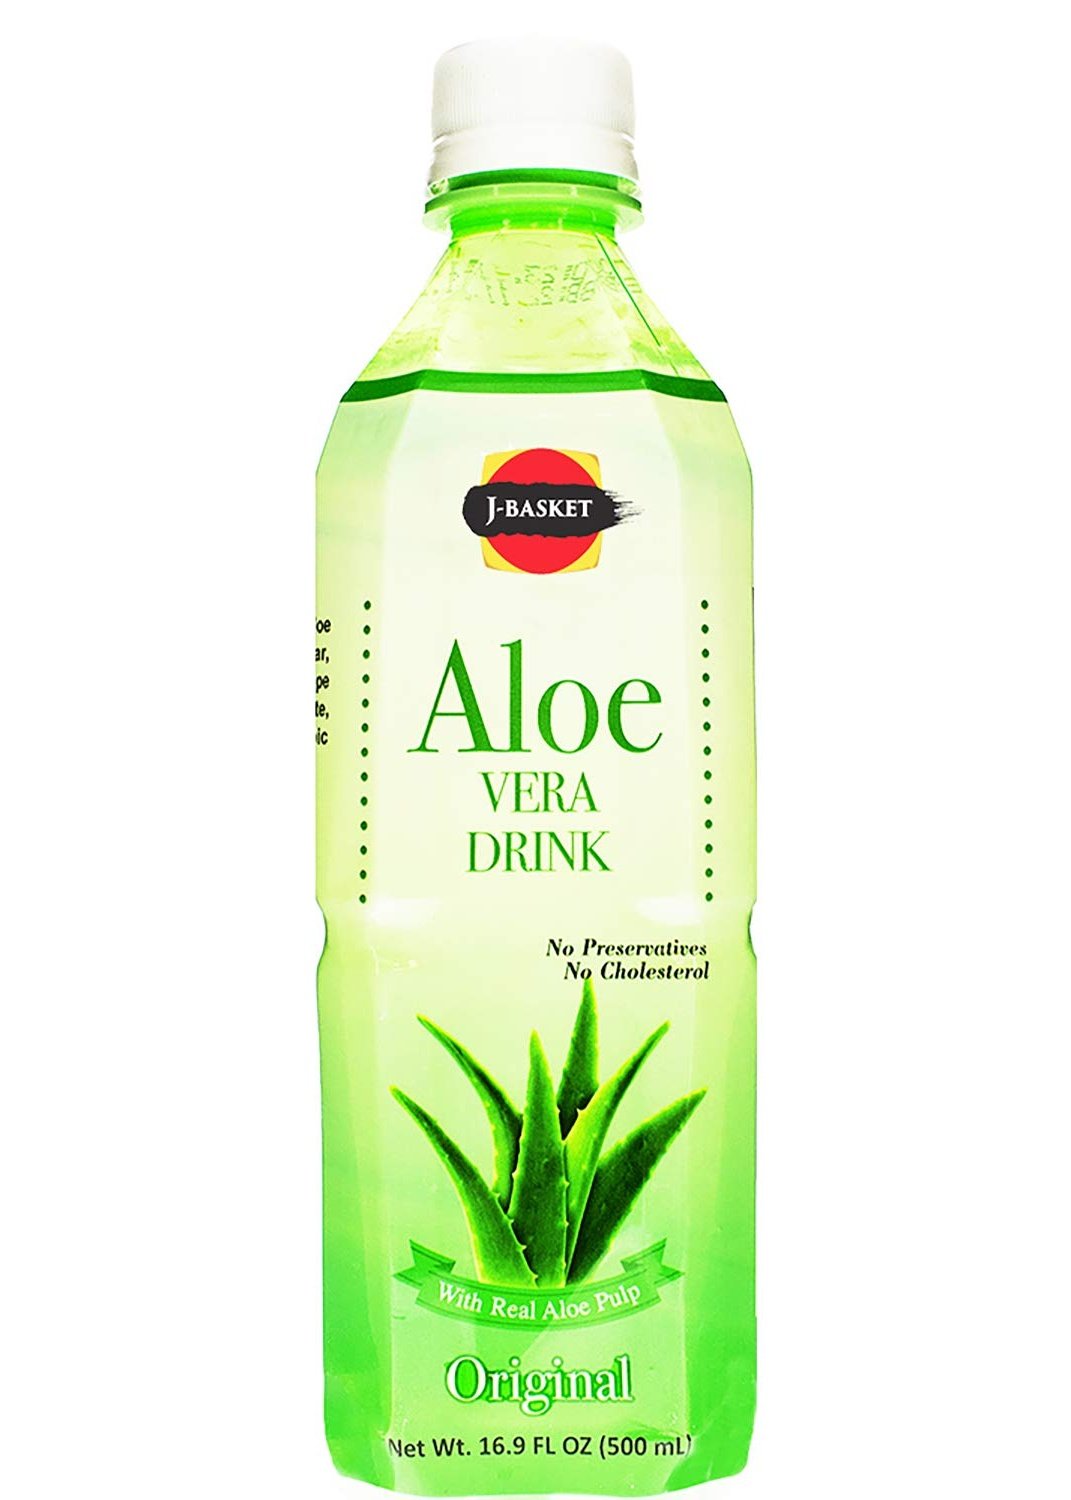 J-BASKET Aloe Vera Drink